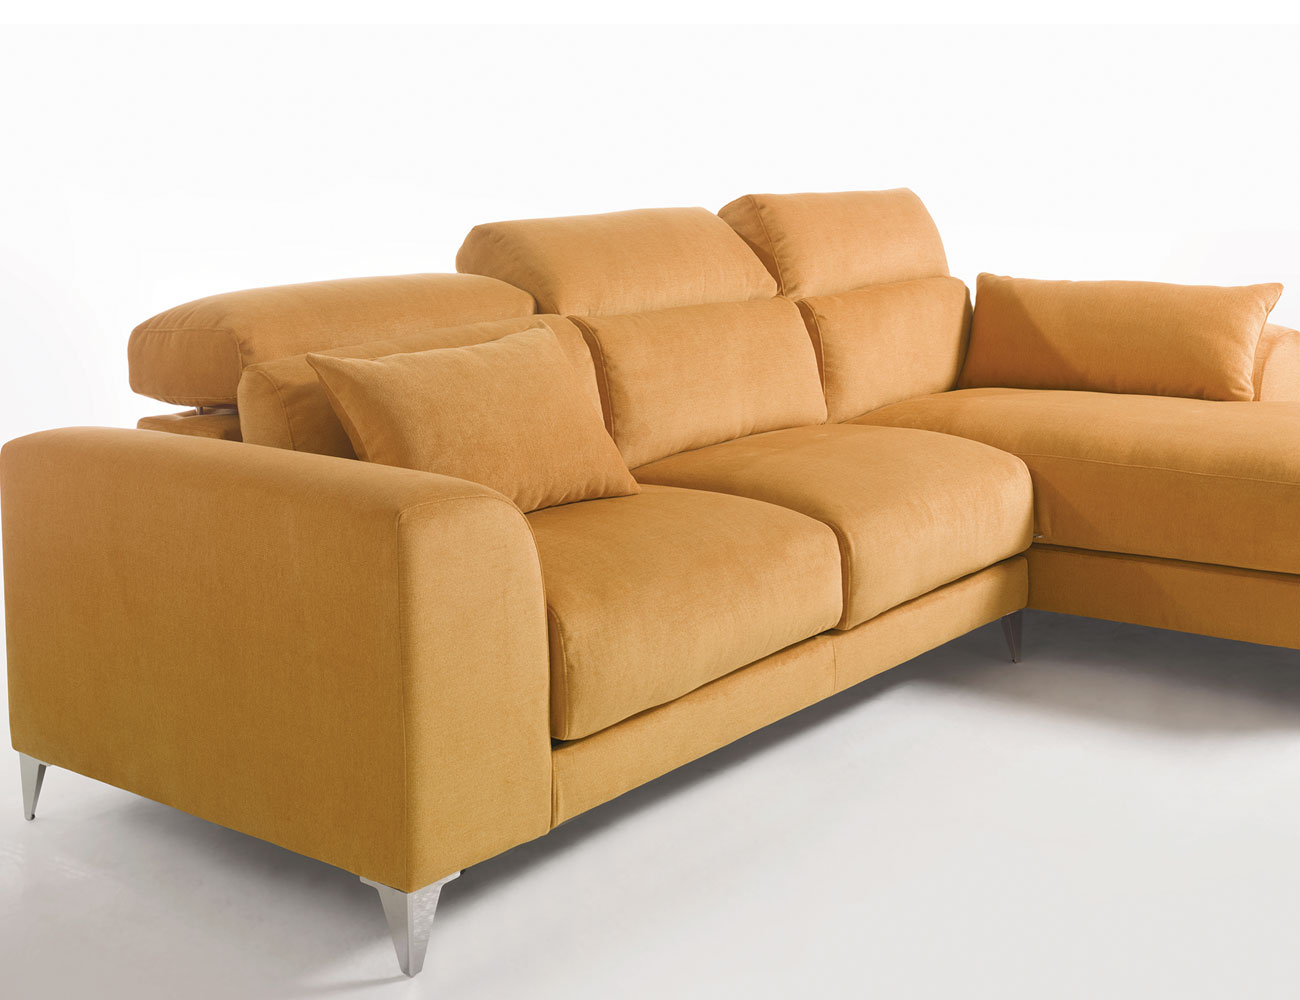 Sofa chaiselongue gran lujo decorativo patas altas amarillo 25